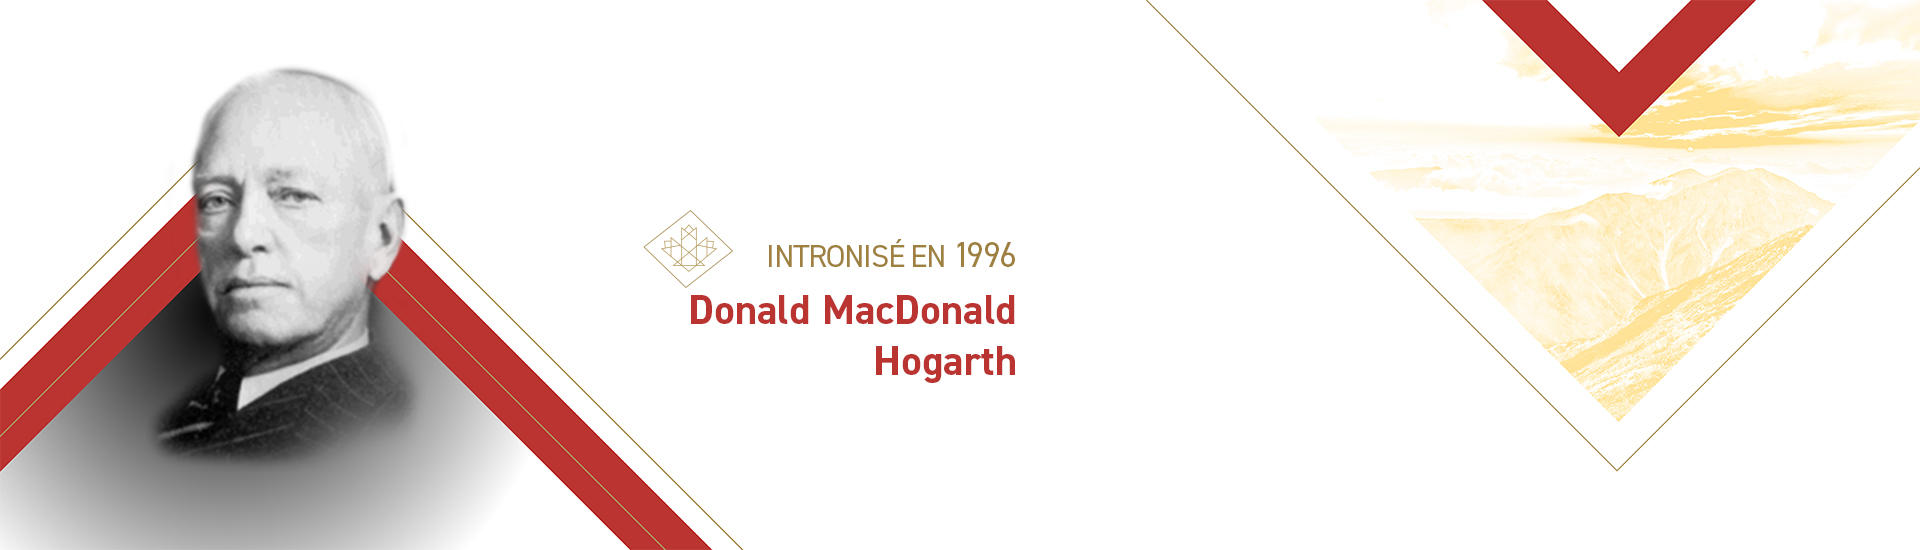 Donald MacDonald Hogarth (1878-1950)